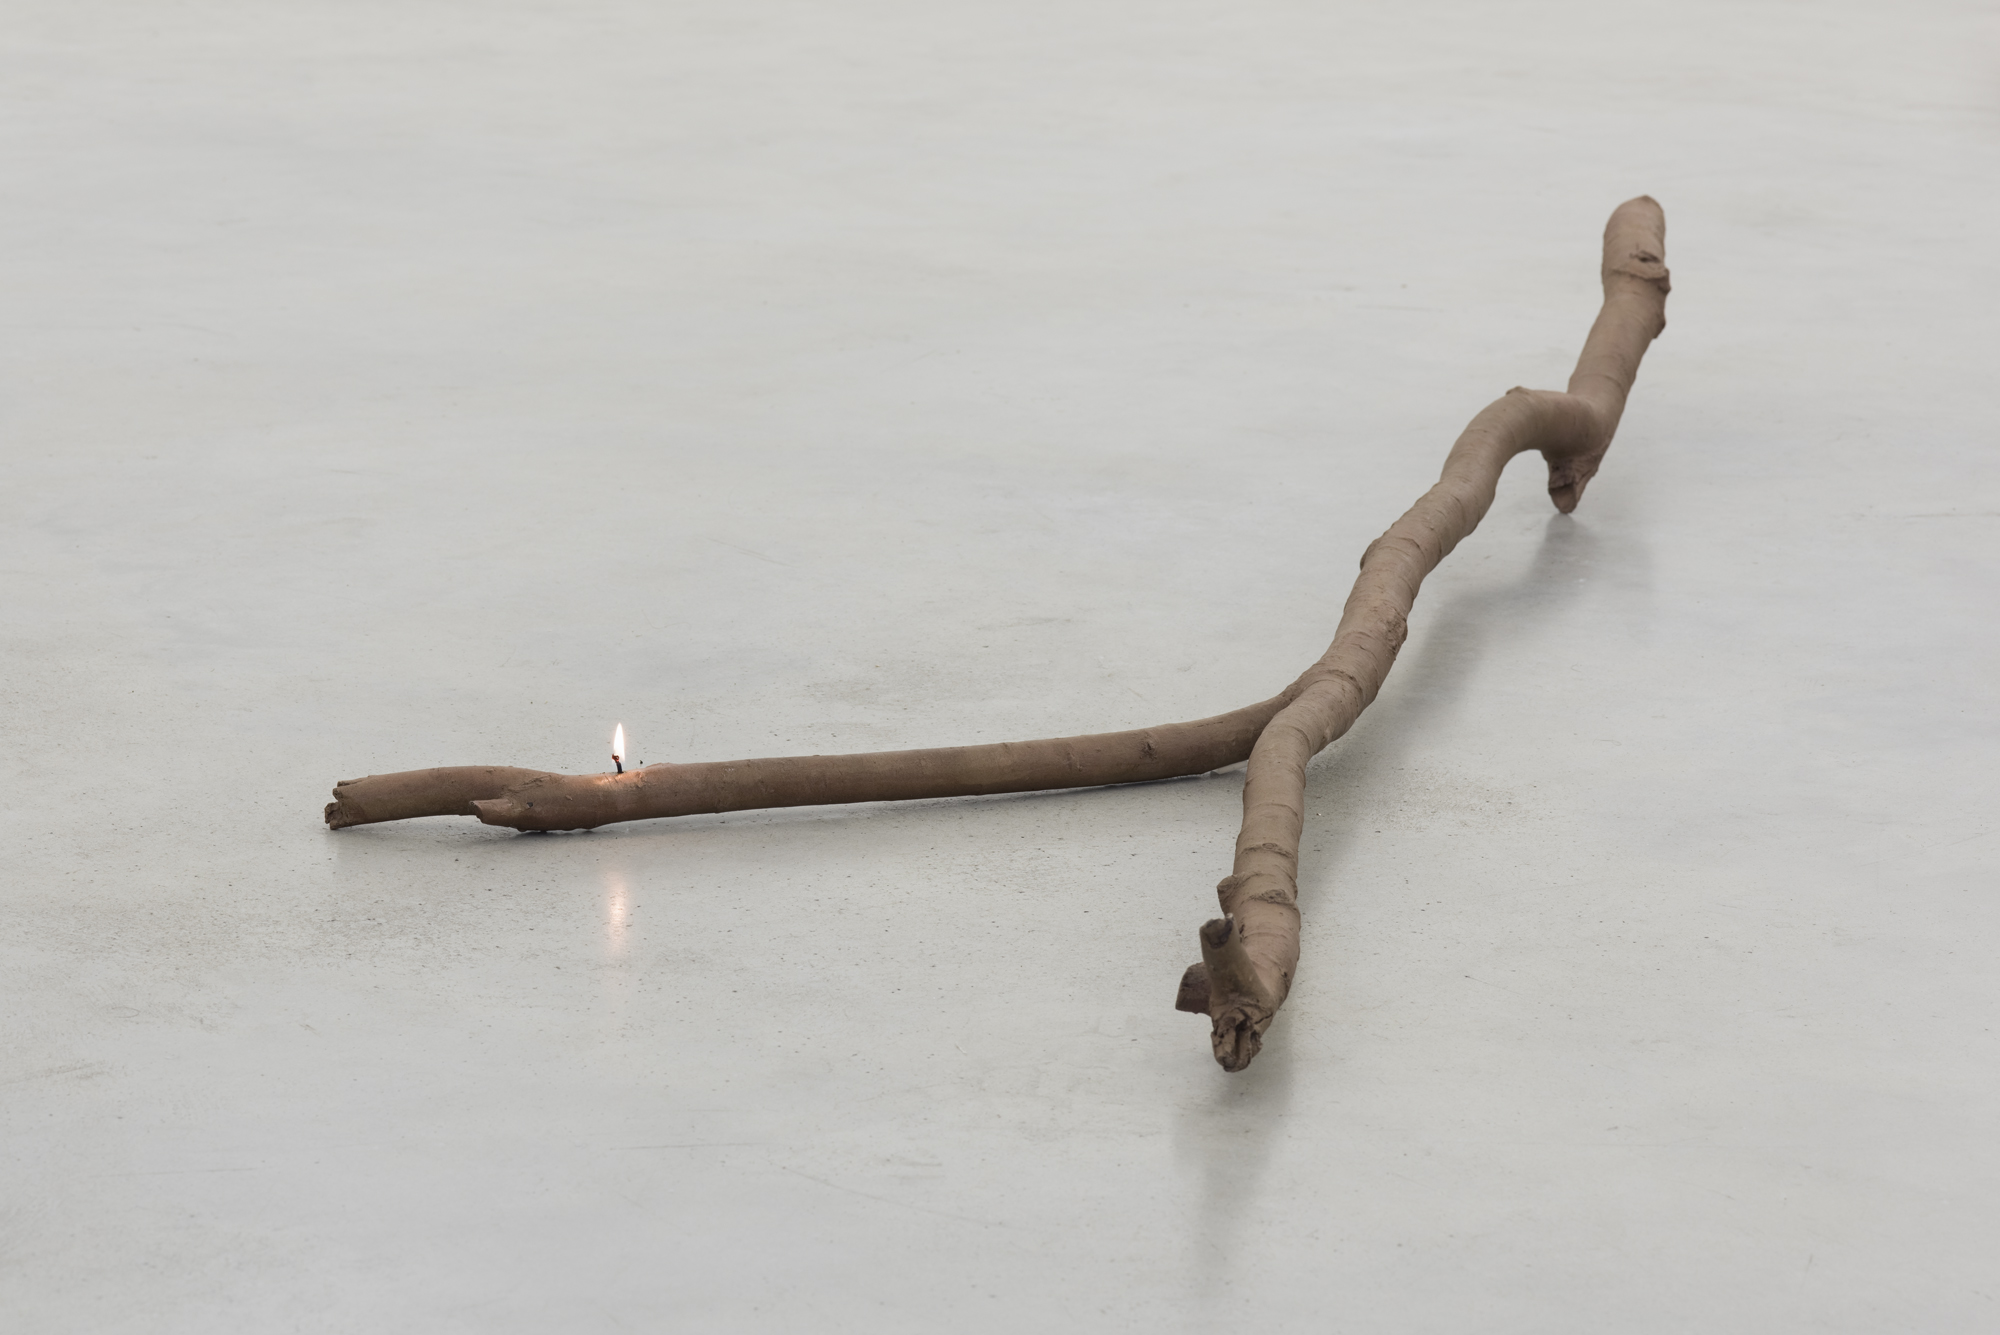 Ariel Schlesinger, At arm’s length, 2017, bronze, cotton wick, lamp oil, variable dimensions